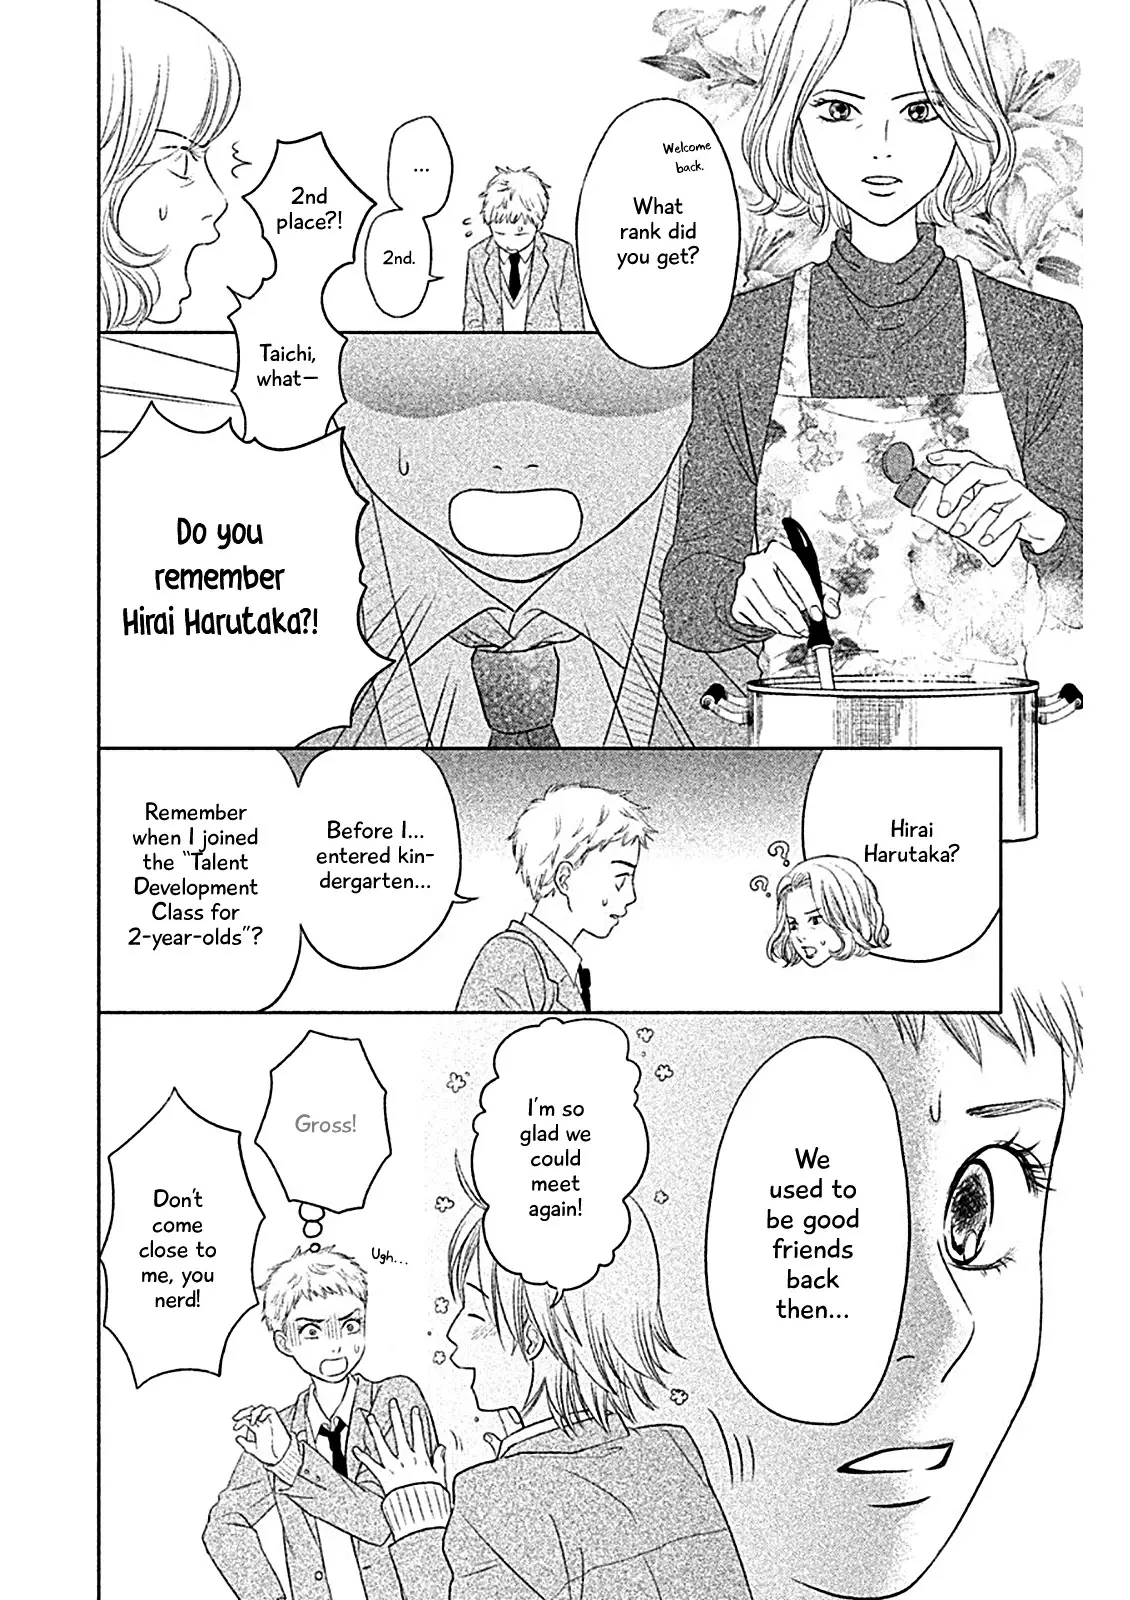 Chihayafuru: Middle School Arc - 3 page 5